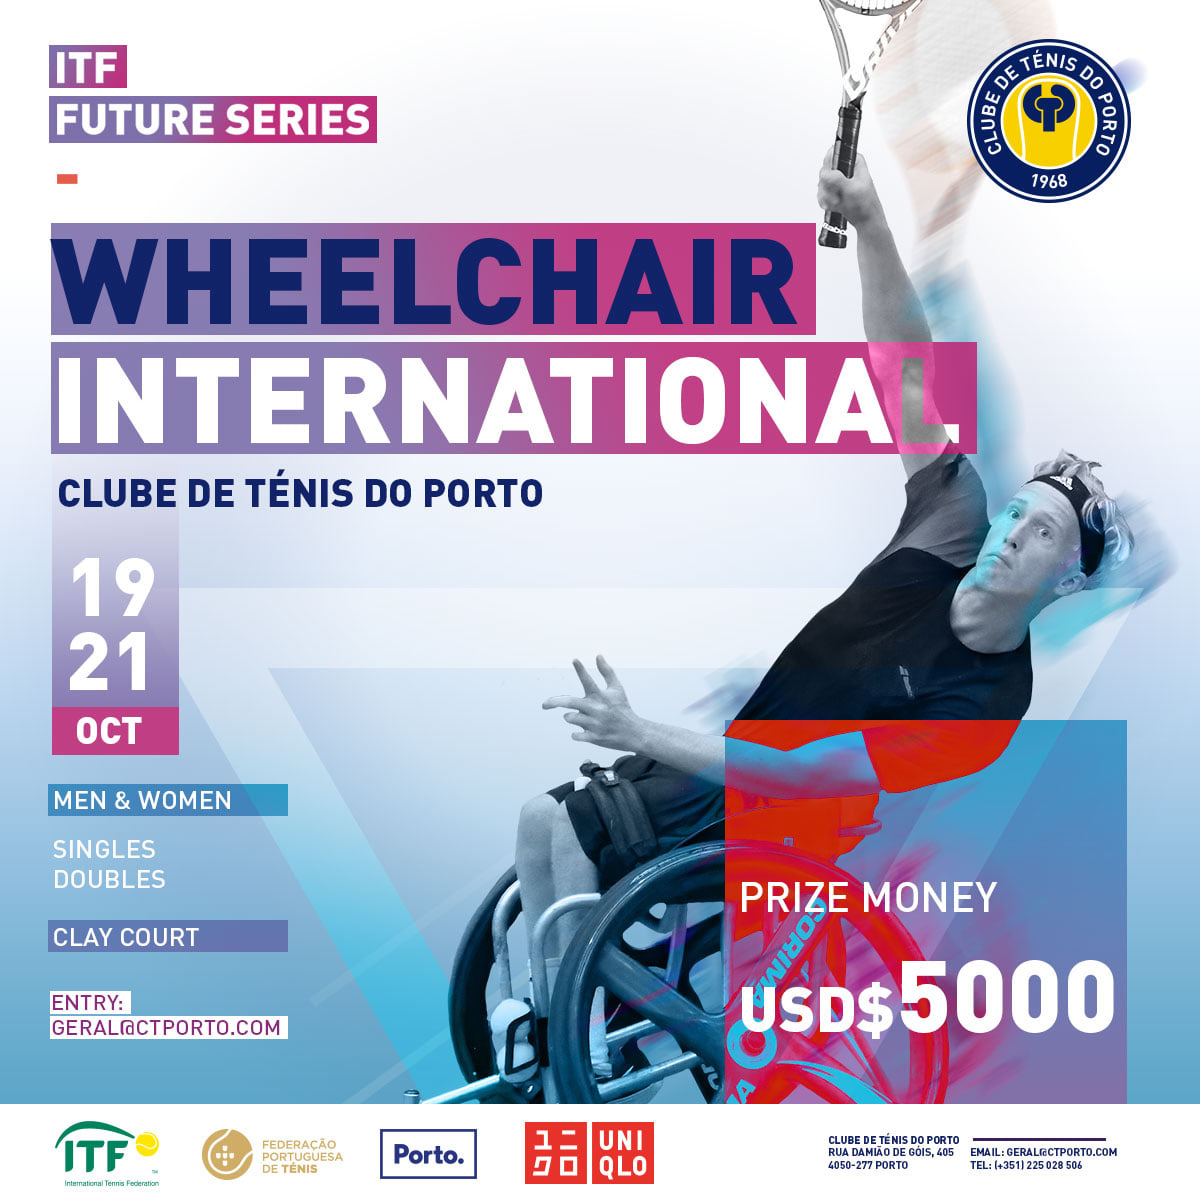 Wheelchair Tennis Internacional Tournament